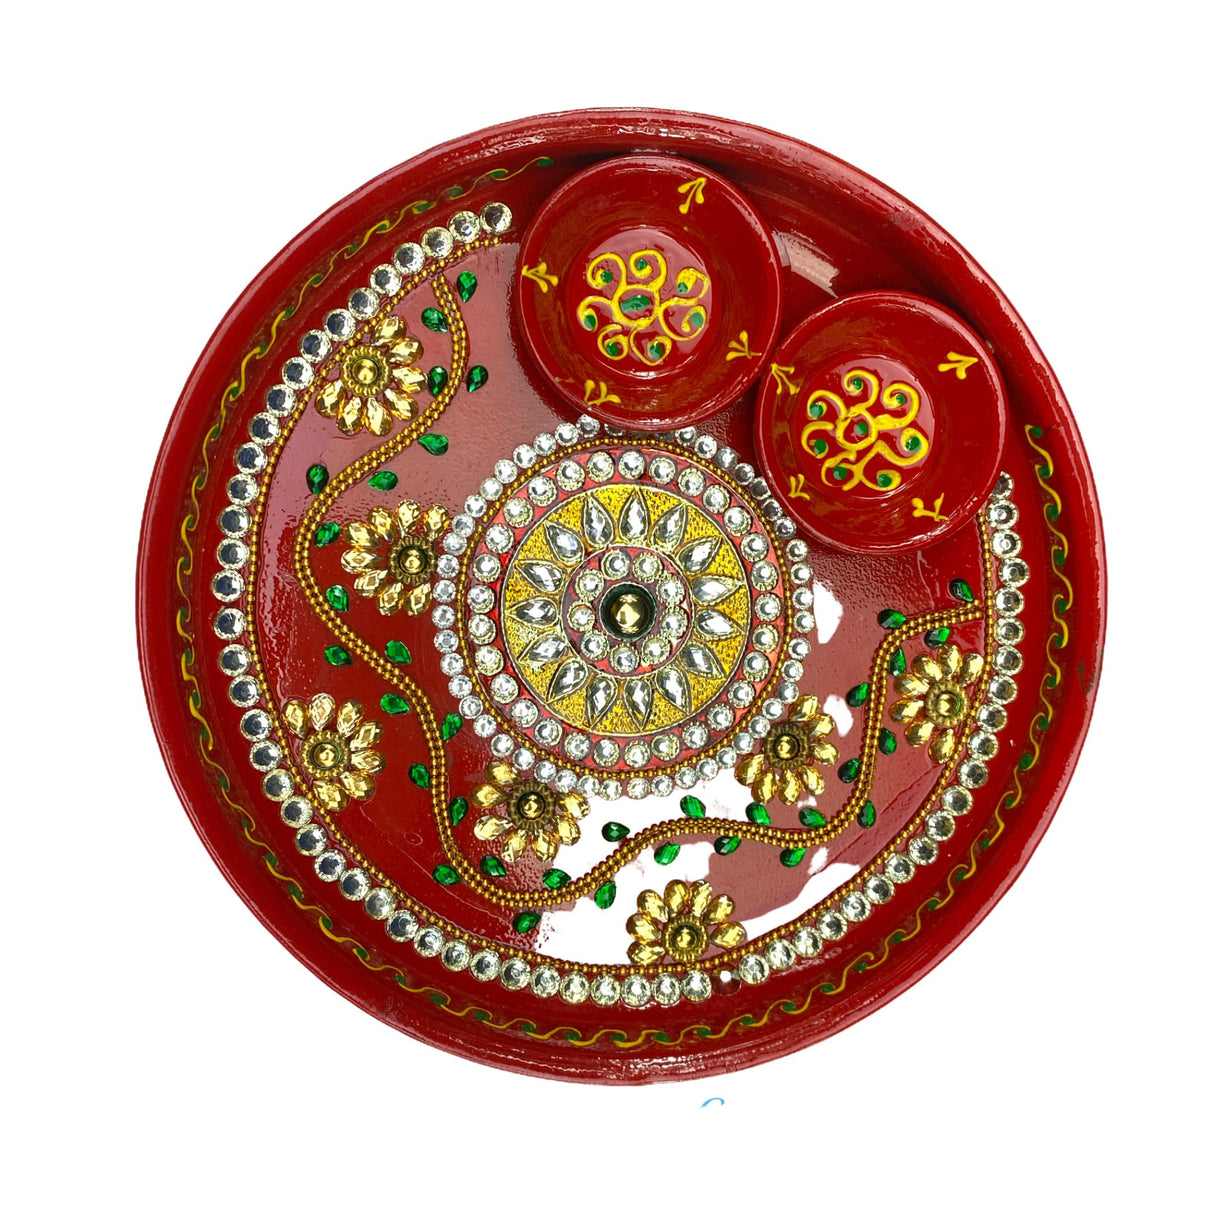 Rhinestone pooja aarti thali with bowls meenakari work red